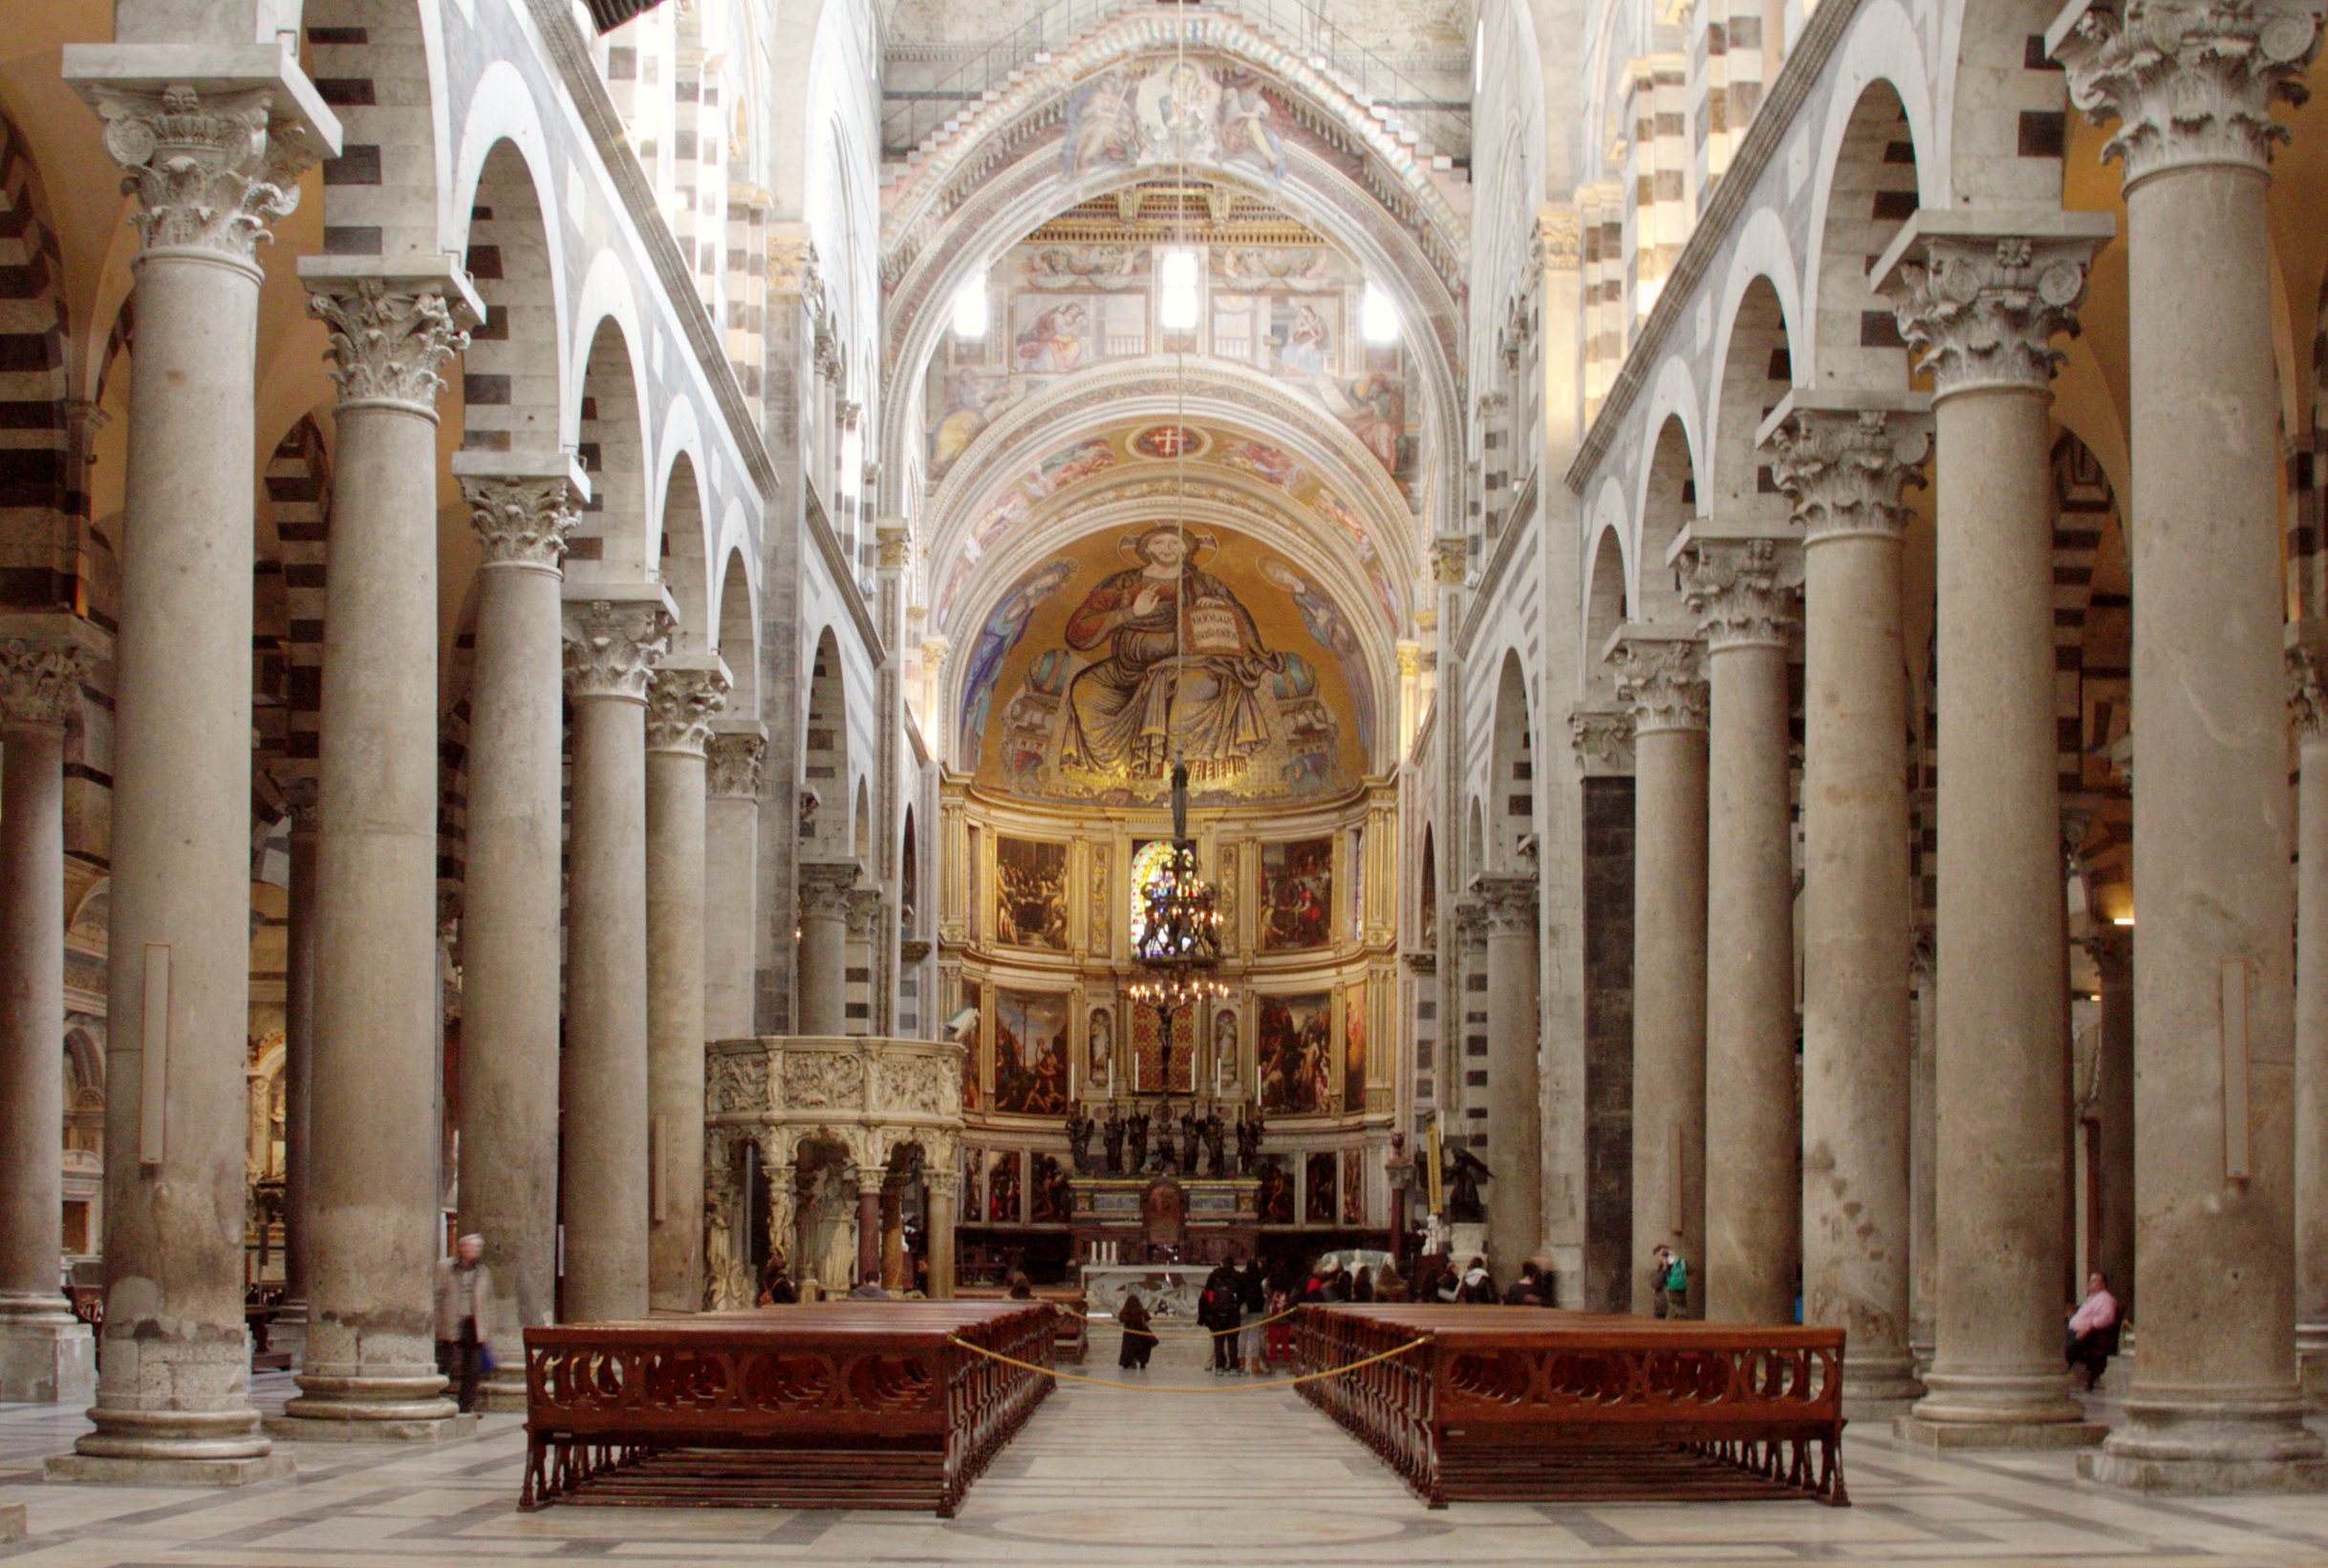 https://upload.wikimedia.org/wikipedia/commons/8/8b/Nave_%28towards_the_altar%29_-_Duomo_-_Pisa_2014.jpg